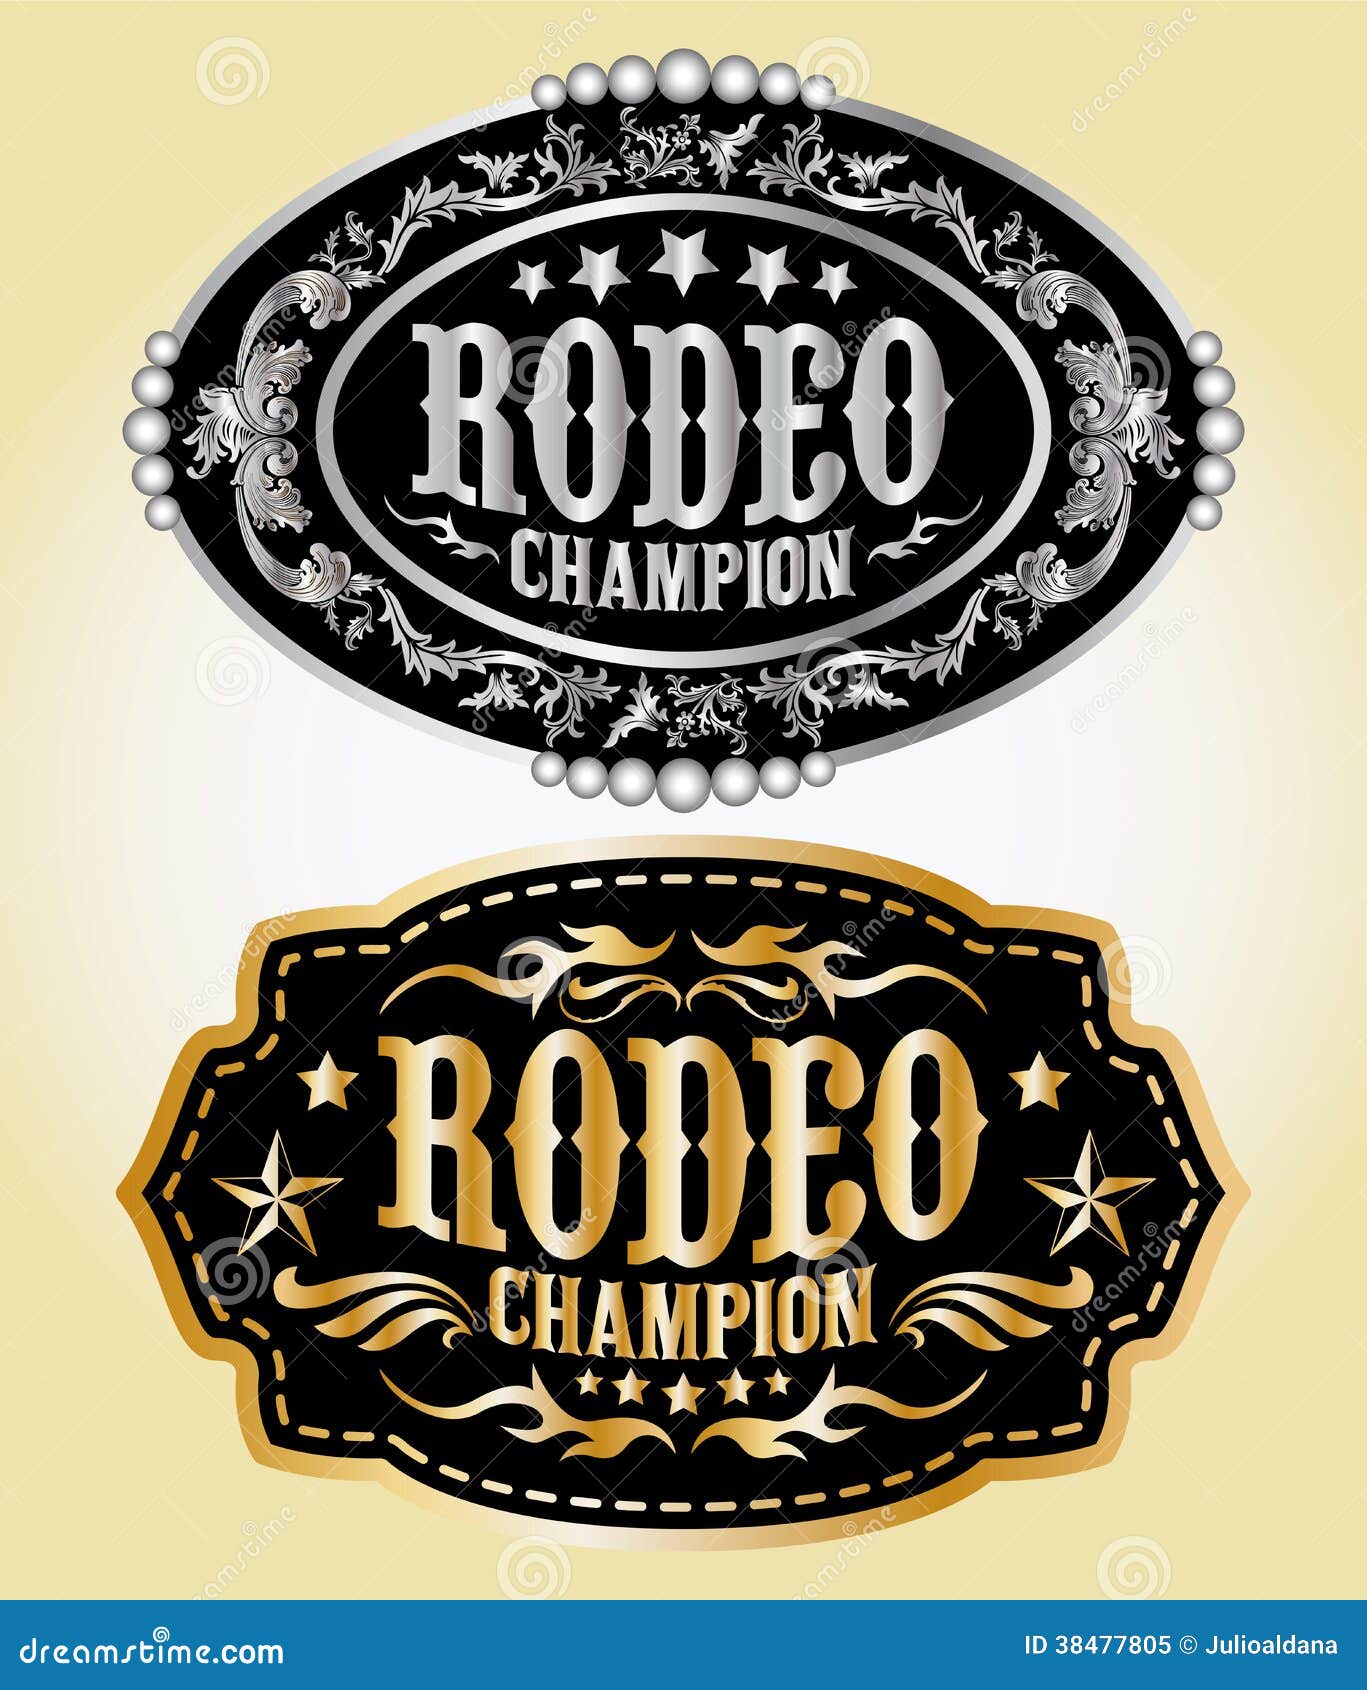 rodeo champion - cowboy belt buckle